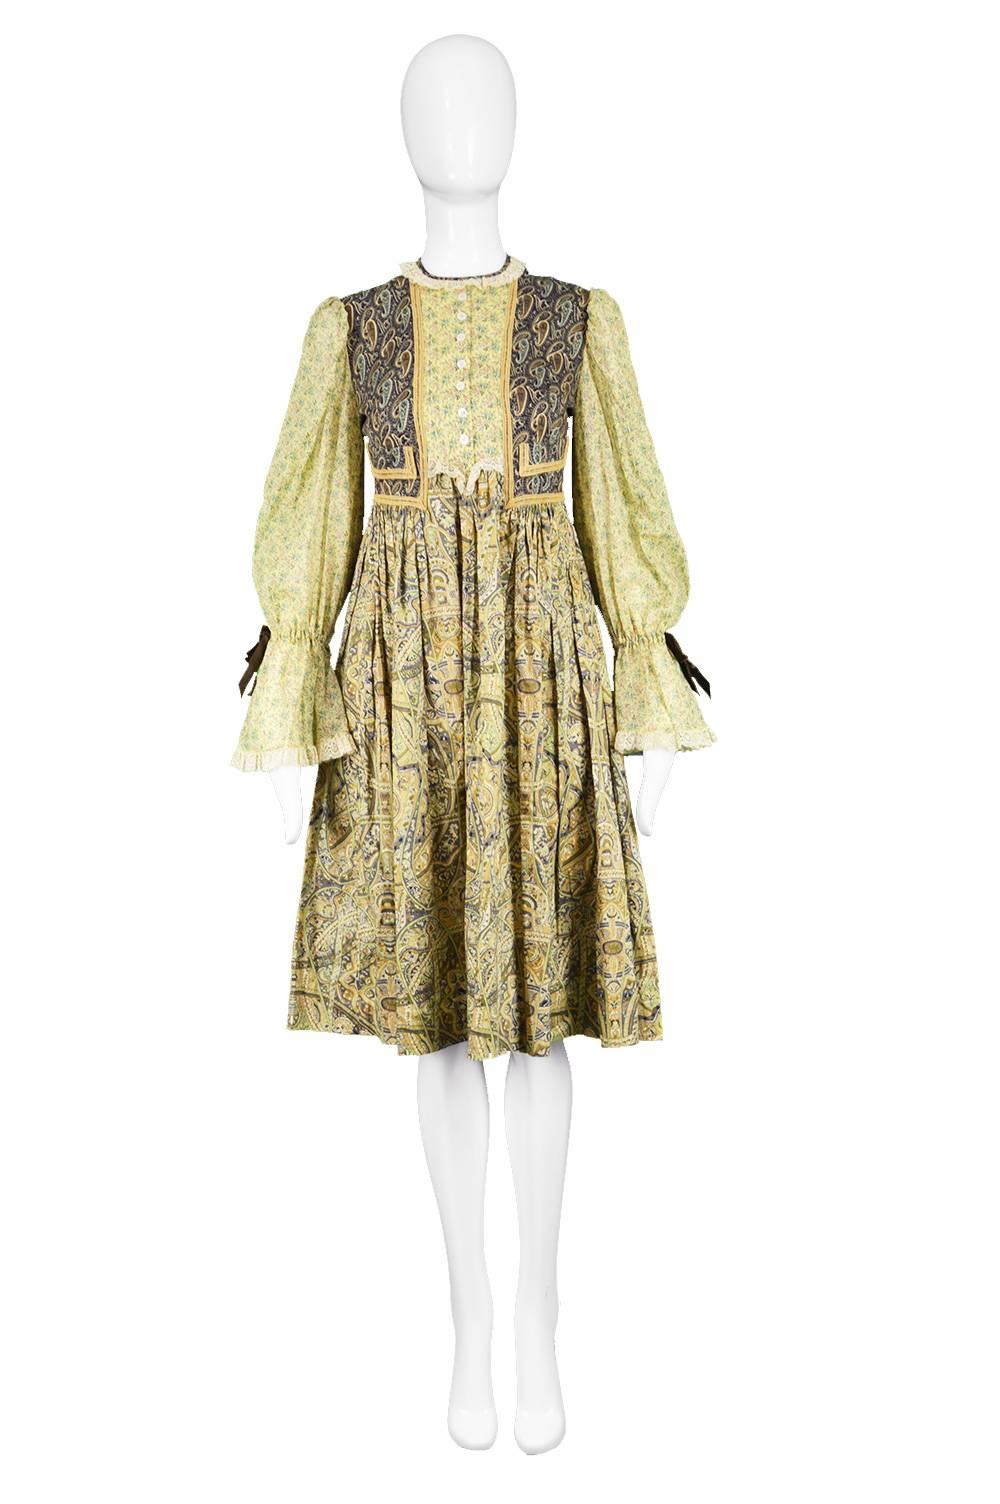 Gina Fratini Vintage Patchwork Fabric Cotton Prairie Dress, 1970s

Estimated Size: UK 10/ US 6/ EU 38. Please check measurements. 
Bust - 34” / 86cm
Waist - 30” / 76cm
Hips - Free
Length (Shoulder to Hem) - 40” / 101cm
Shoulder to Shoulder - 14” /